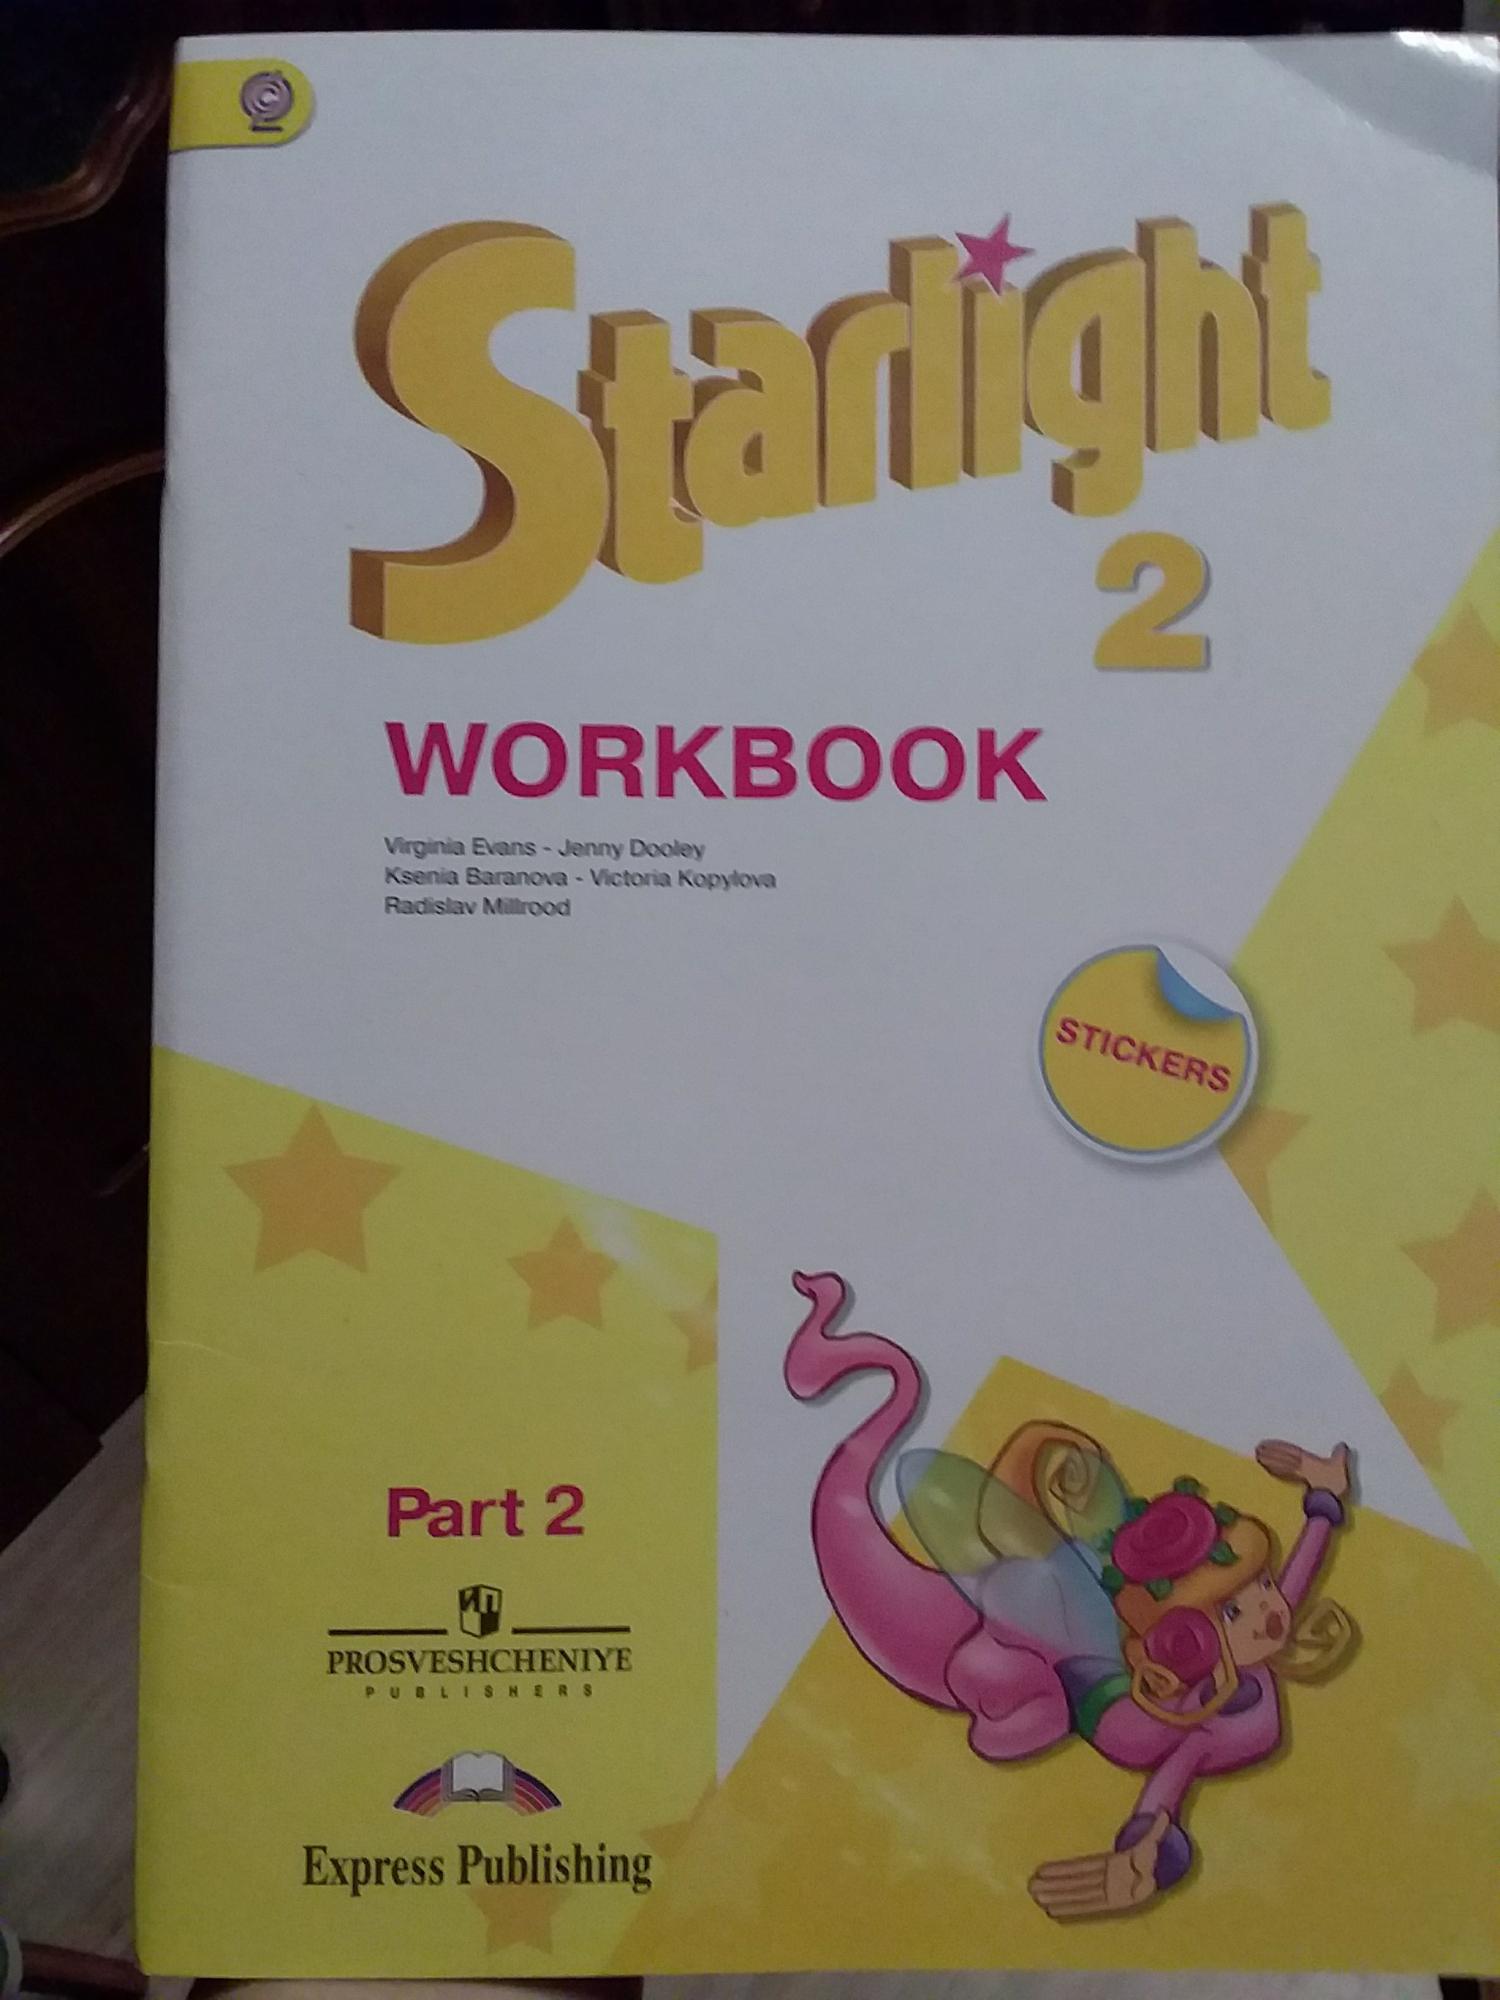 Starlight workbook 3 класс 2 часть. Starlight Workbook 2 класс. Starlight 2 класс рабочая тетрадь. Учебник Старлайт 2. Starlight 2 Workbook 2.